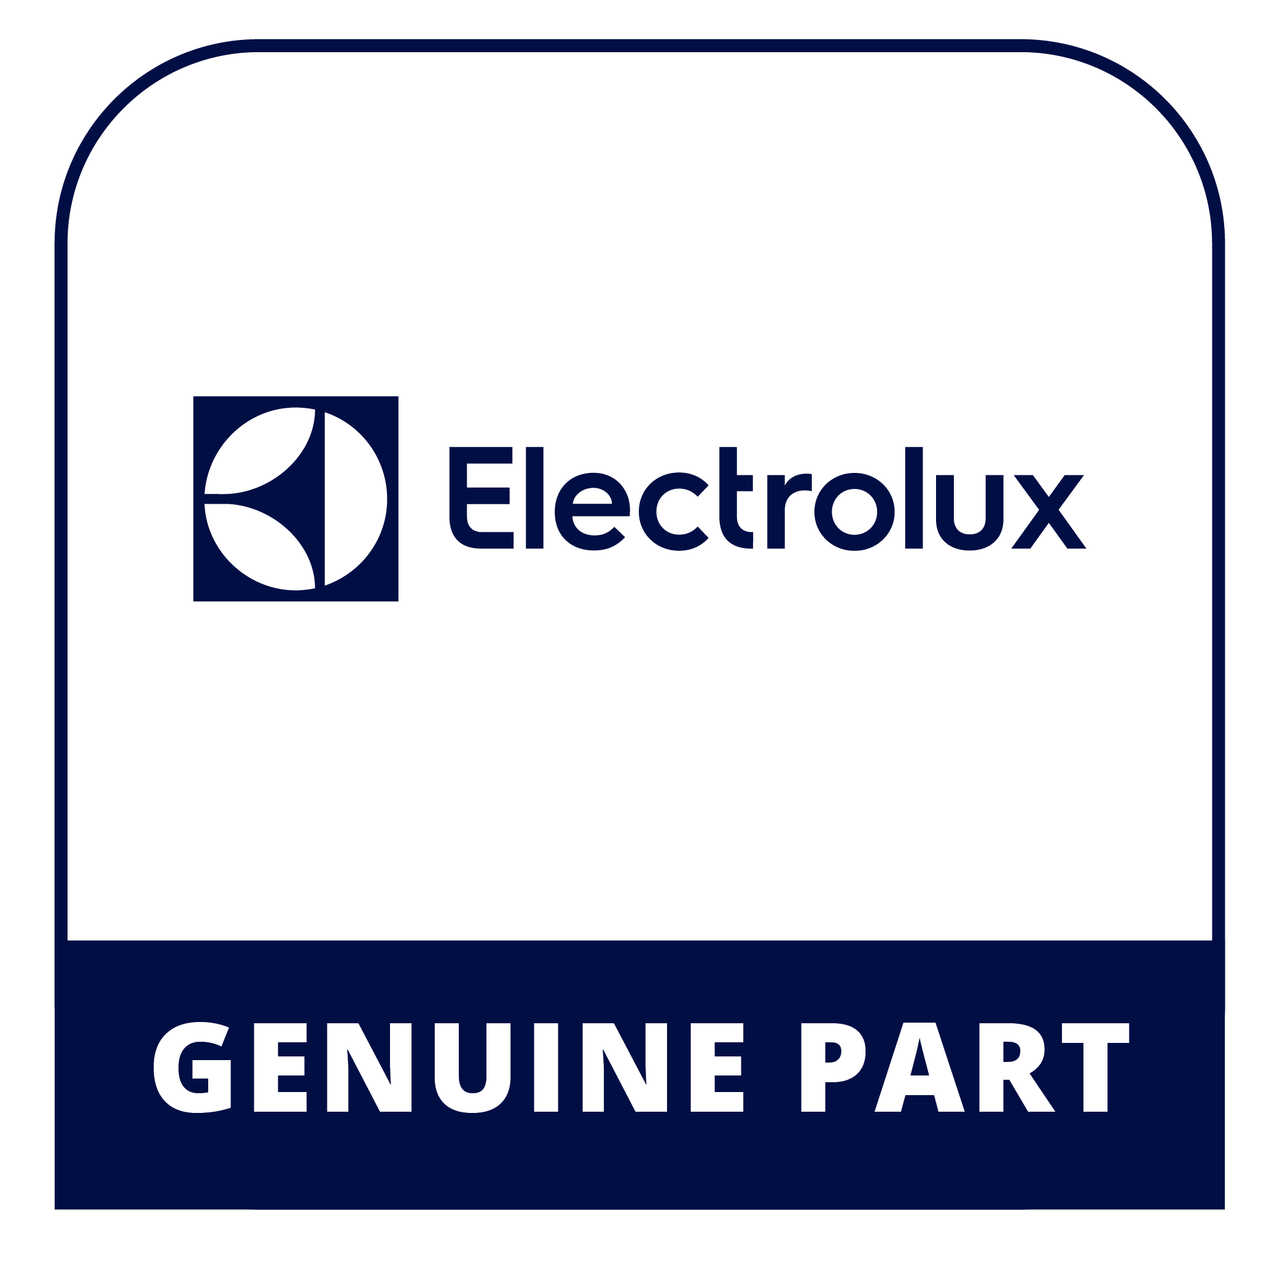 Frigidaire - Electrolux 5304498744 Label - Genuine Electrolux Part